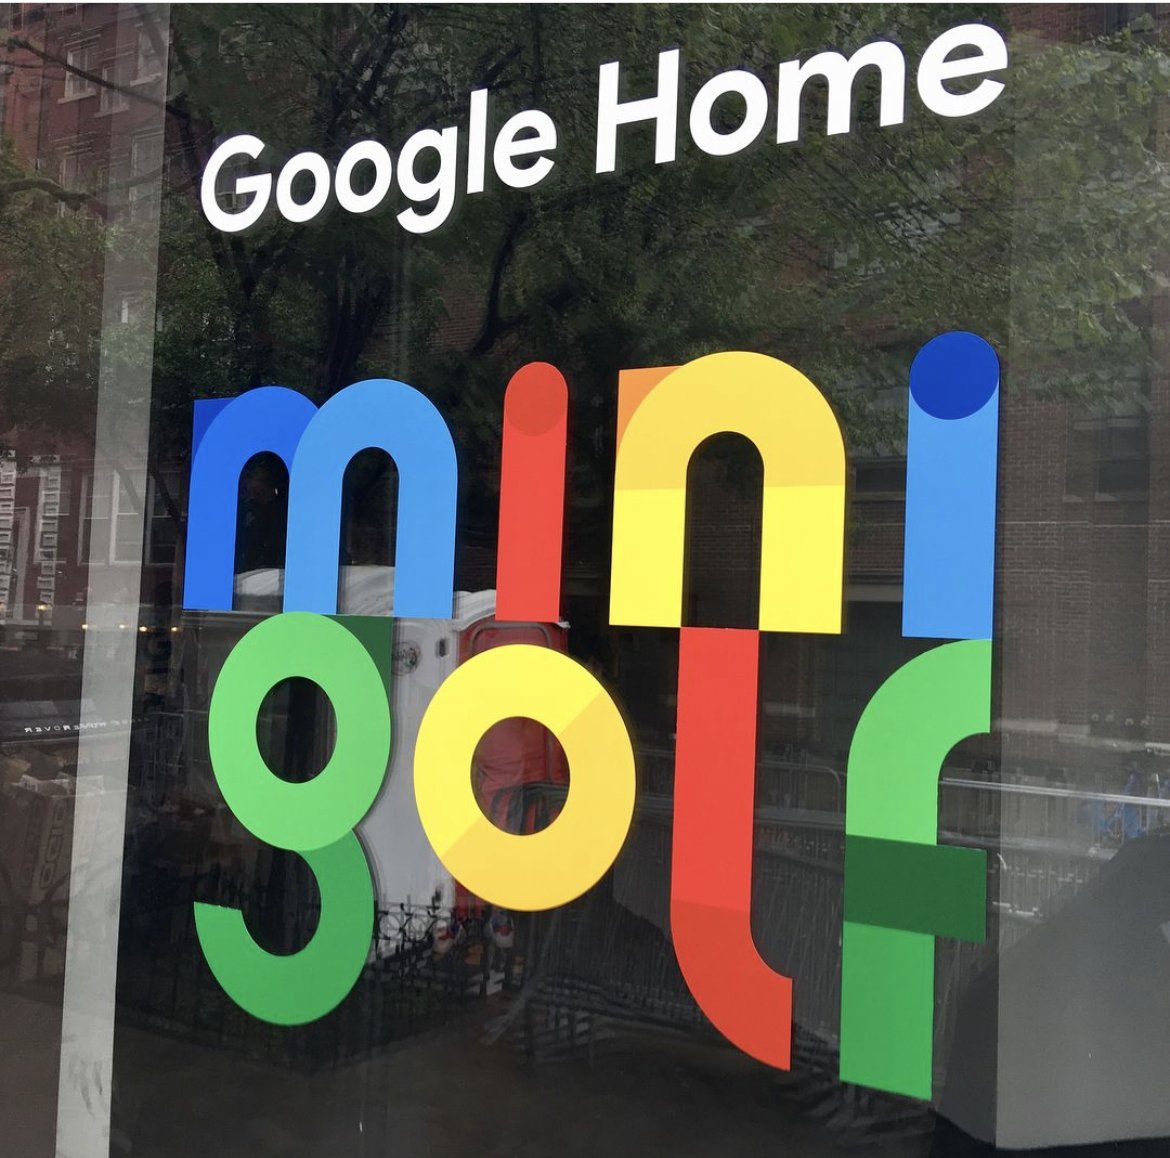 Google's 2018 Home Mini Golf Pop-Up